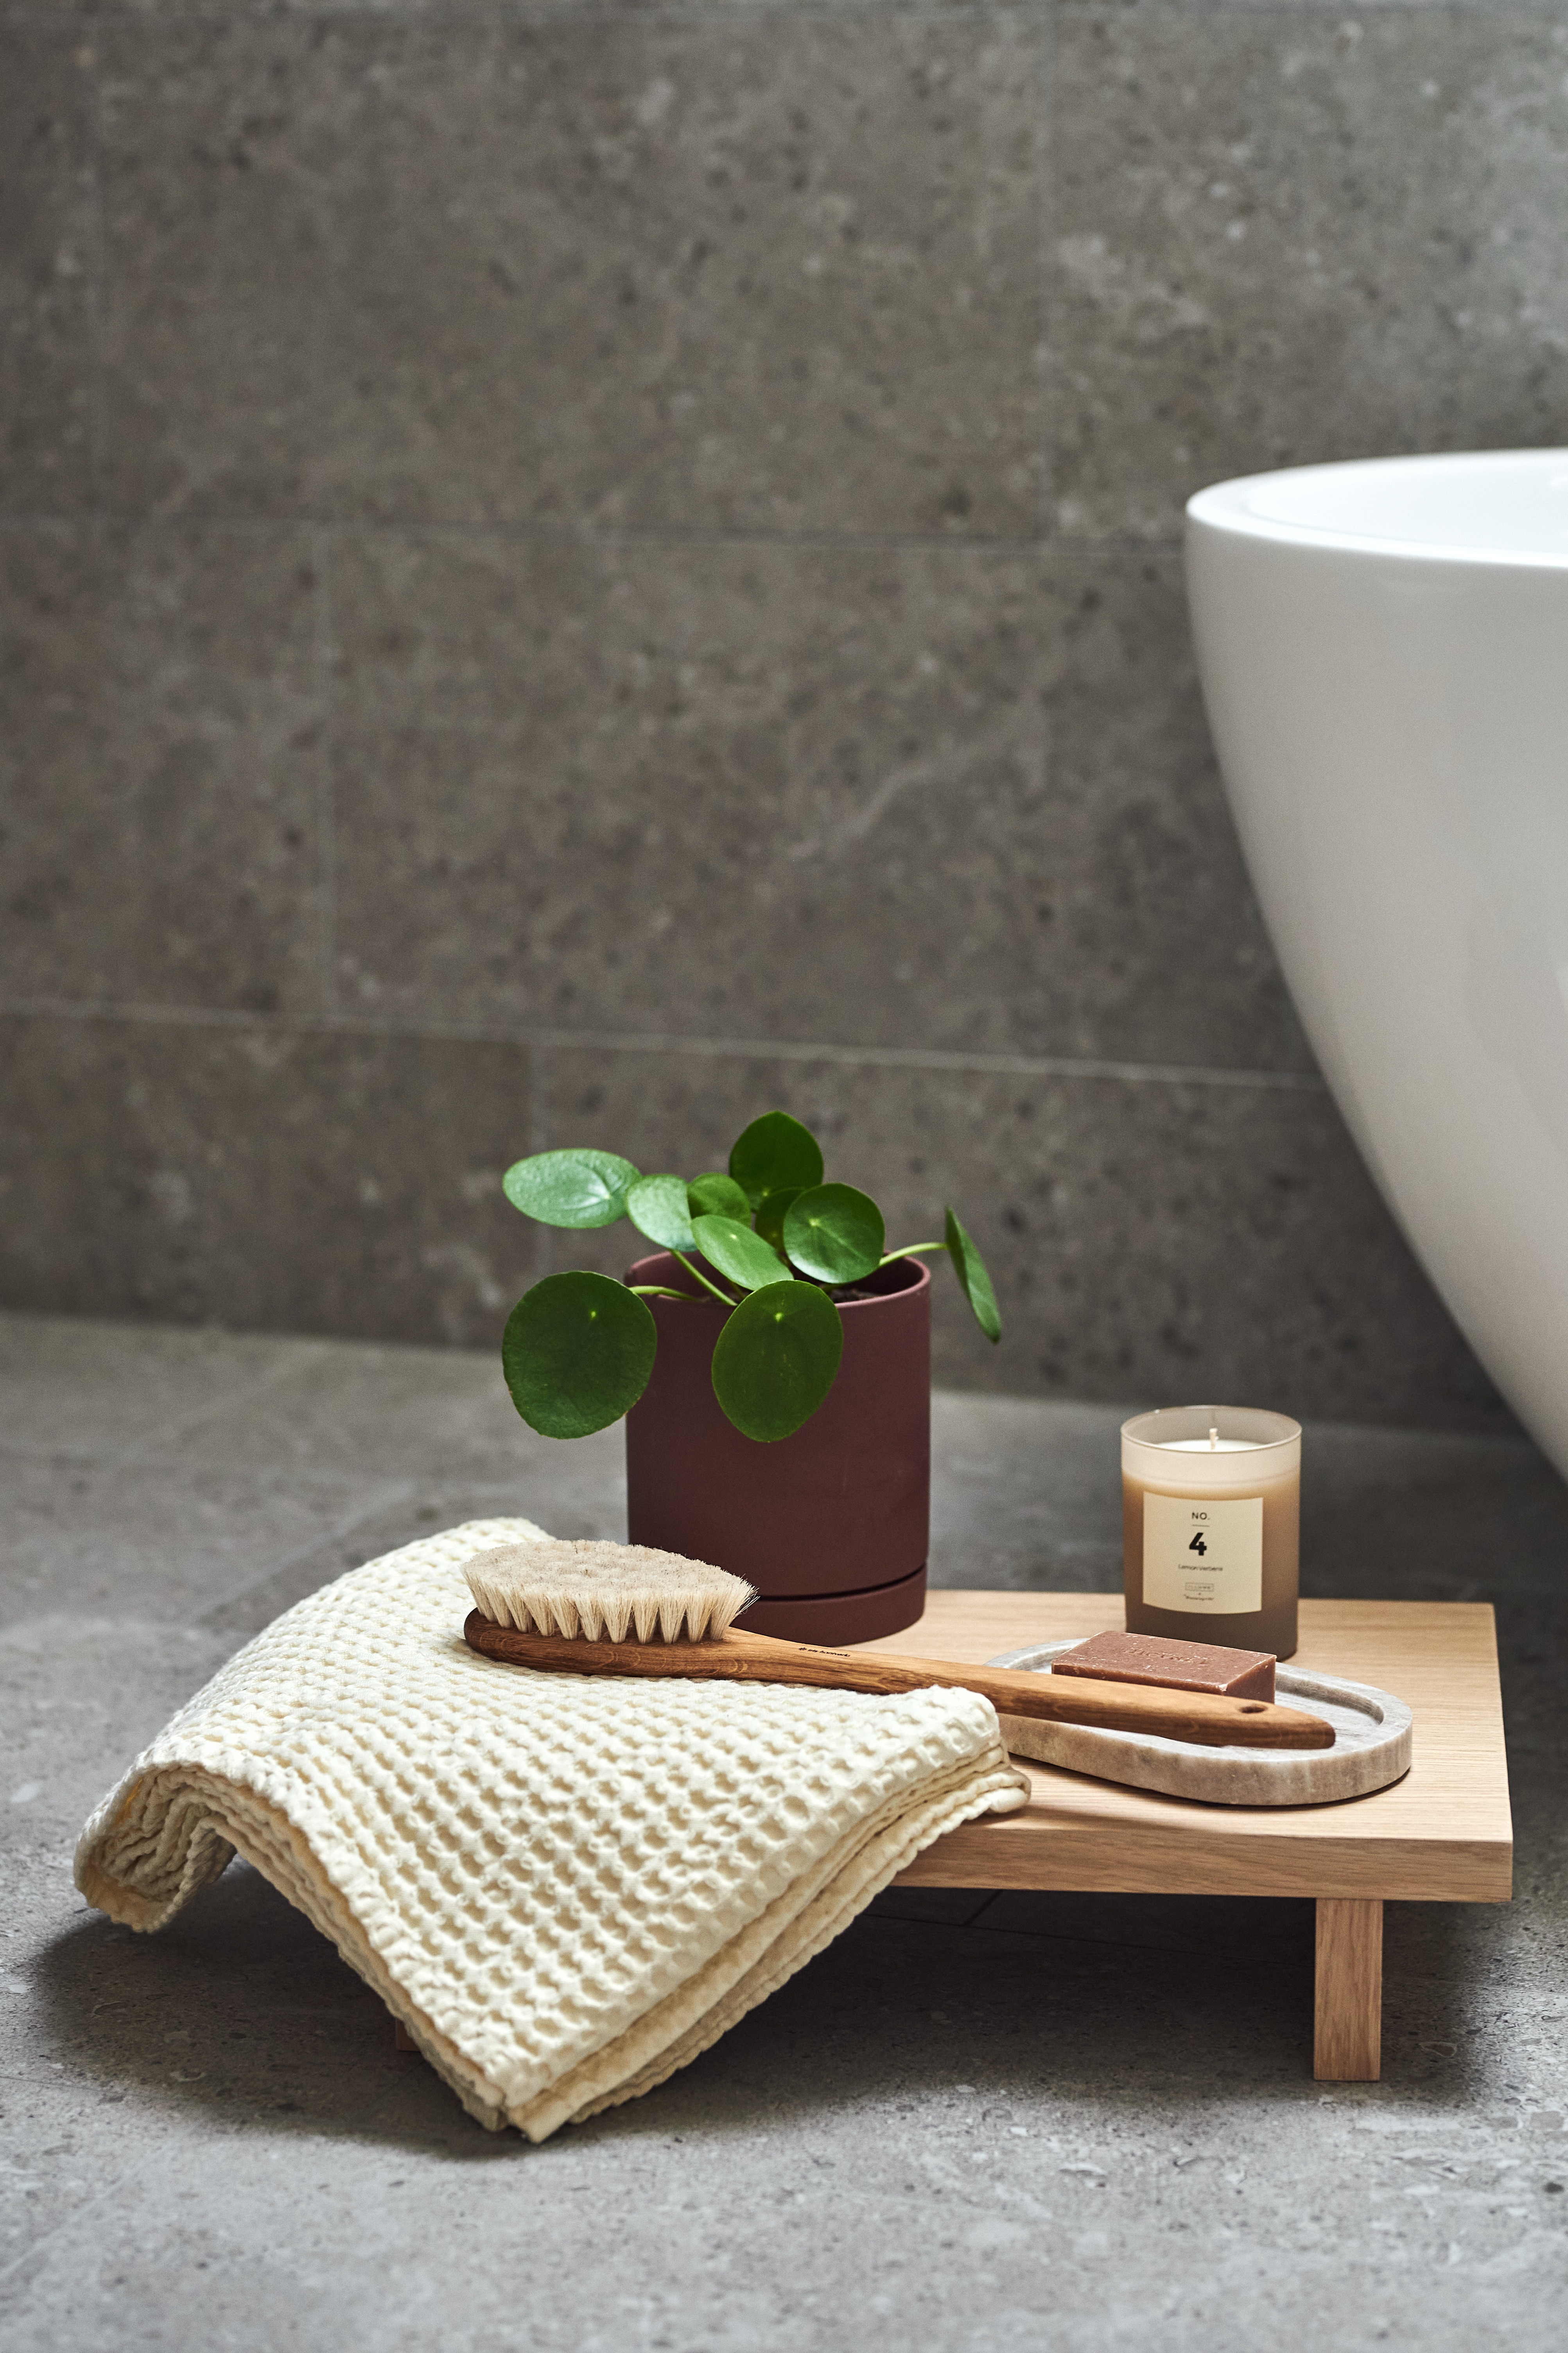 Create spa at home – 5 décor ideas